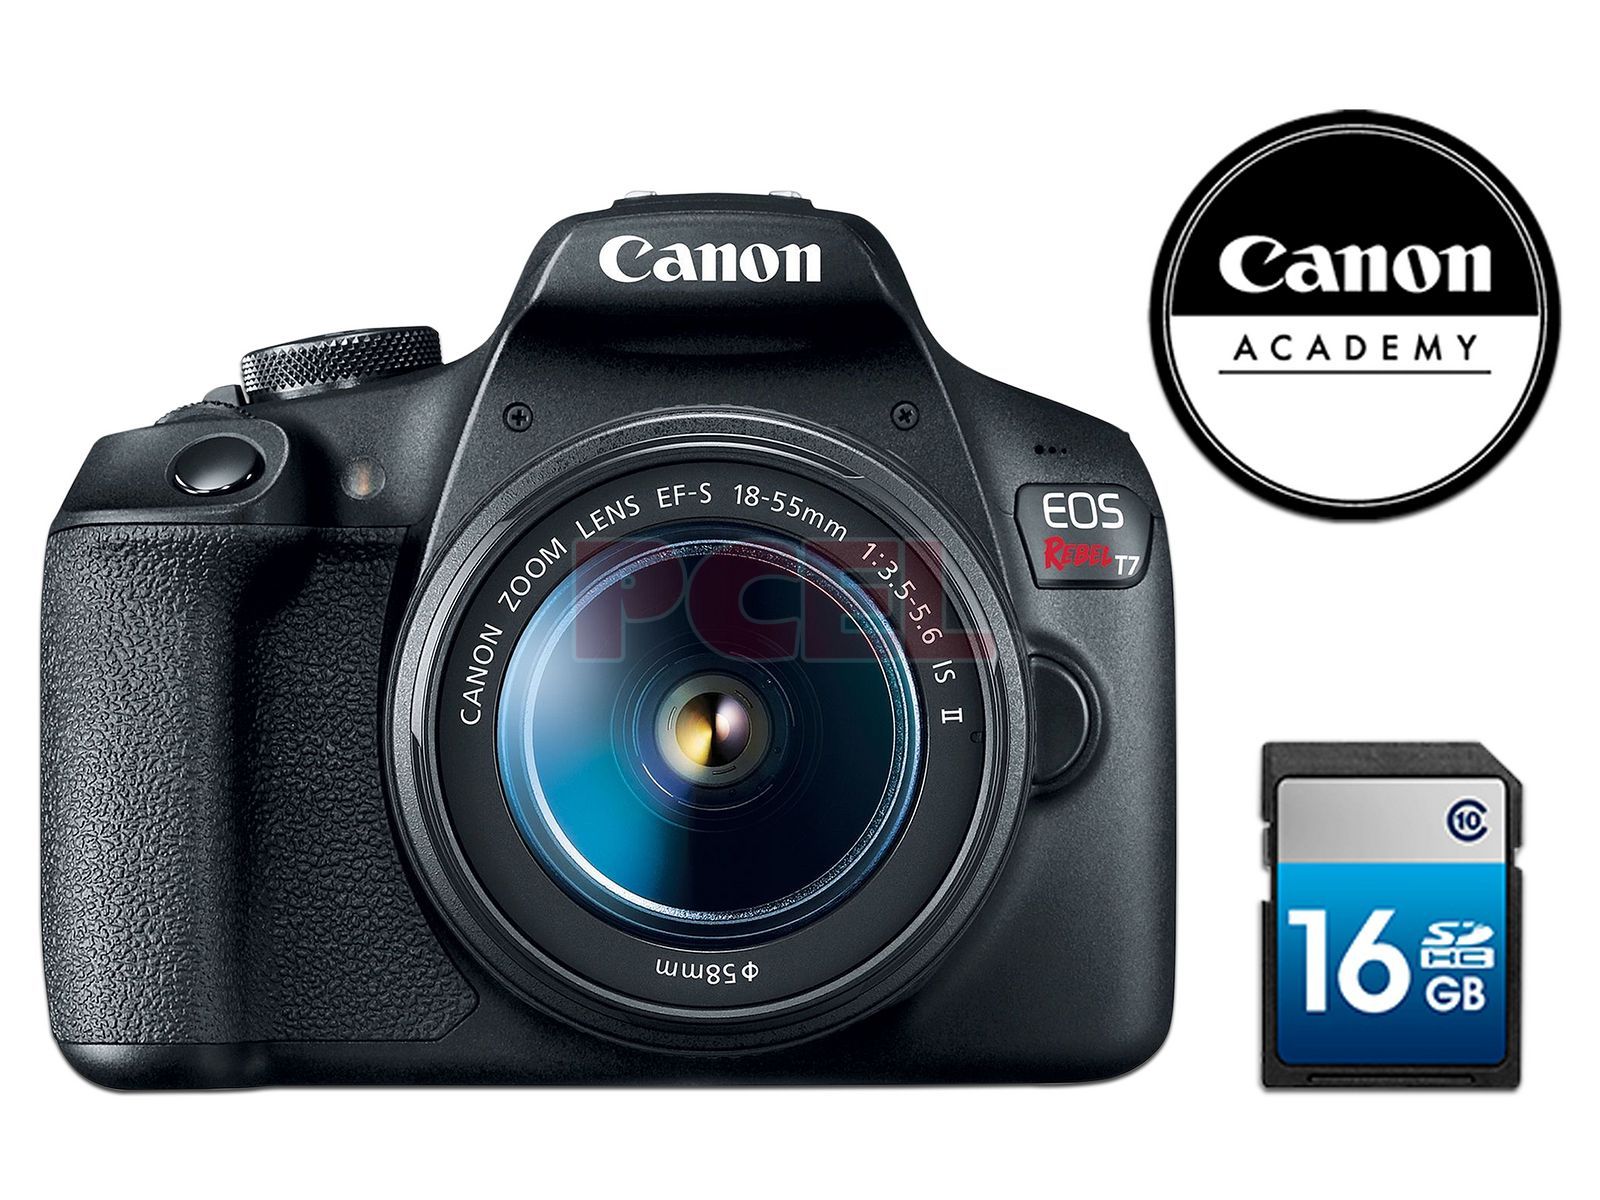 Cámara Fotográfica Digital Canon Rebel T7 EF-S 18-55mm, MP, Video Full HD, Wi-Fi. Incluye lente 18-55 mm, curso online de la foto y SD 16 GB.